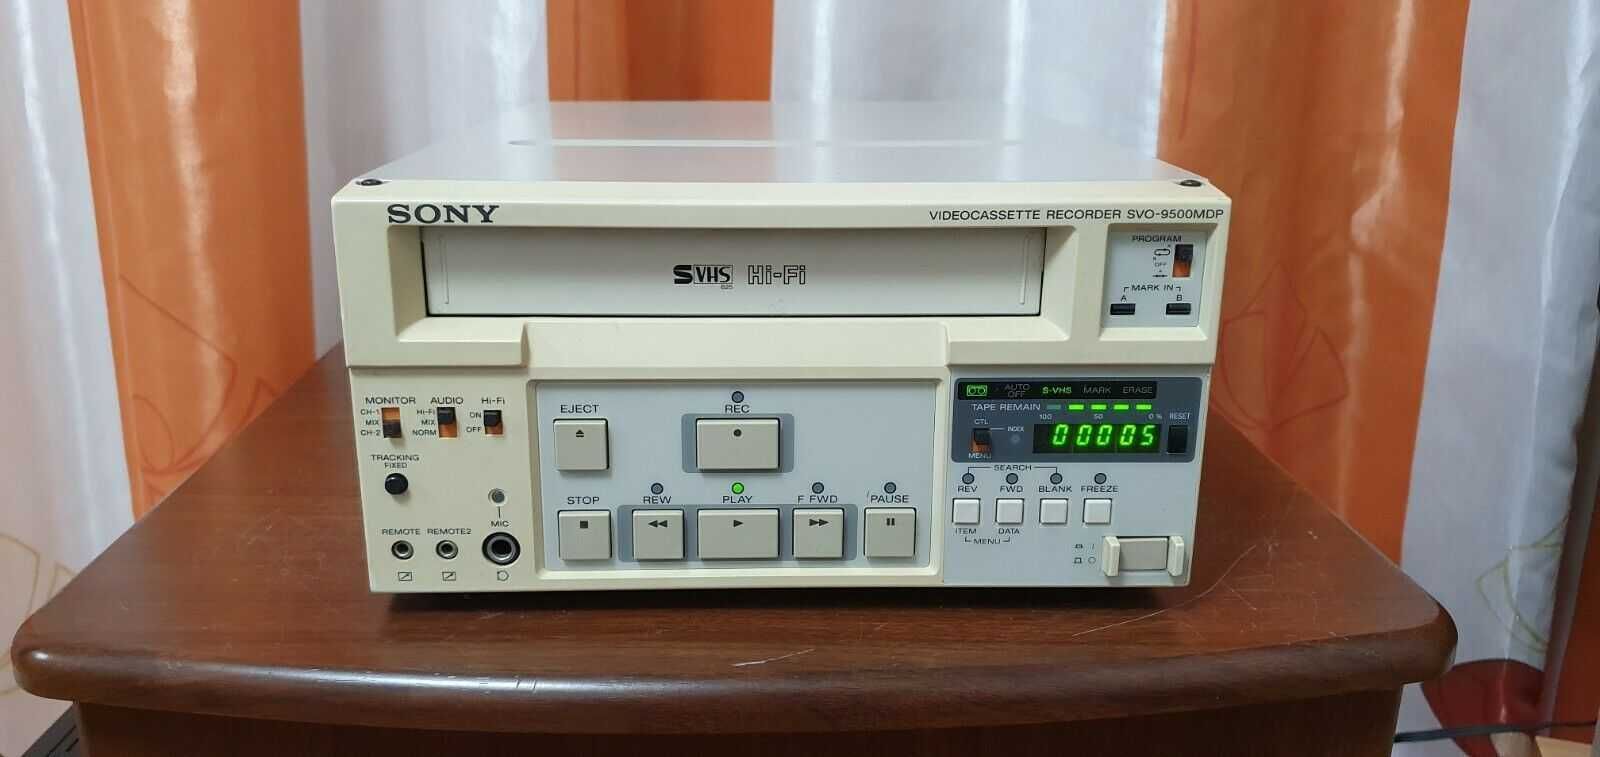 Видеомагнитофон Sony SVO-9500MDP, S-VHS, Hi-Fi (Japan)